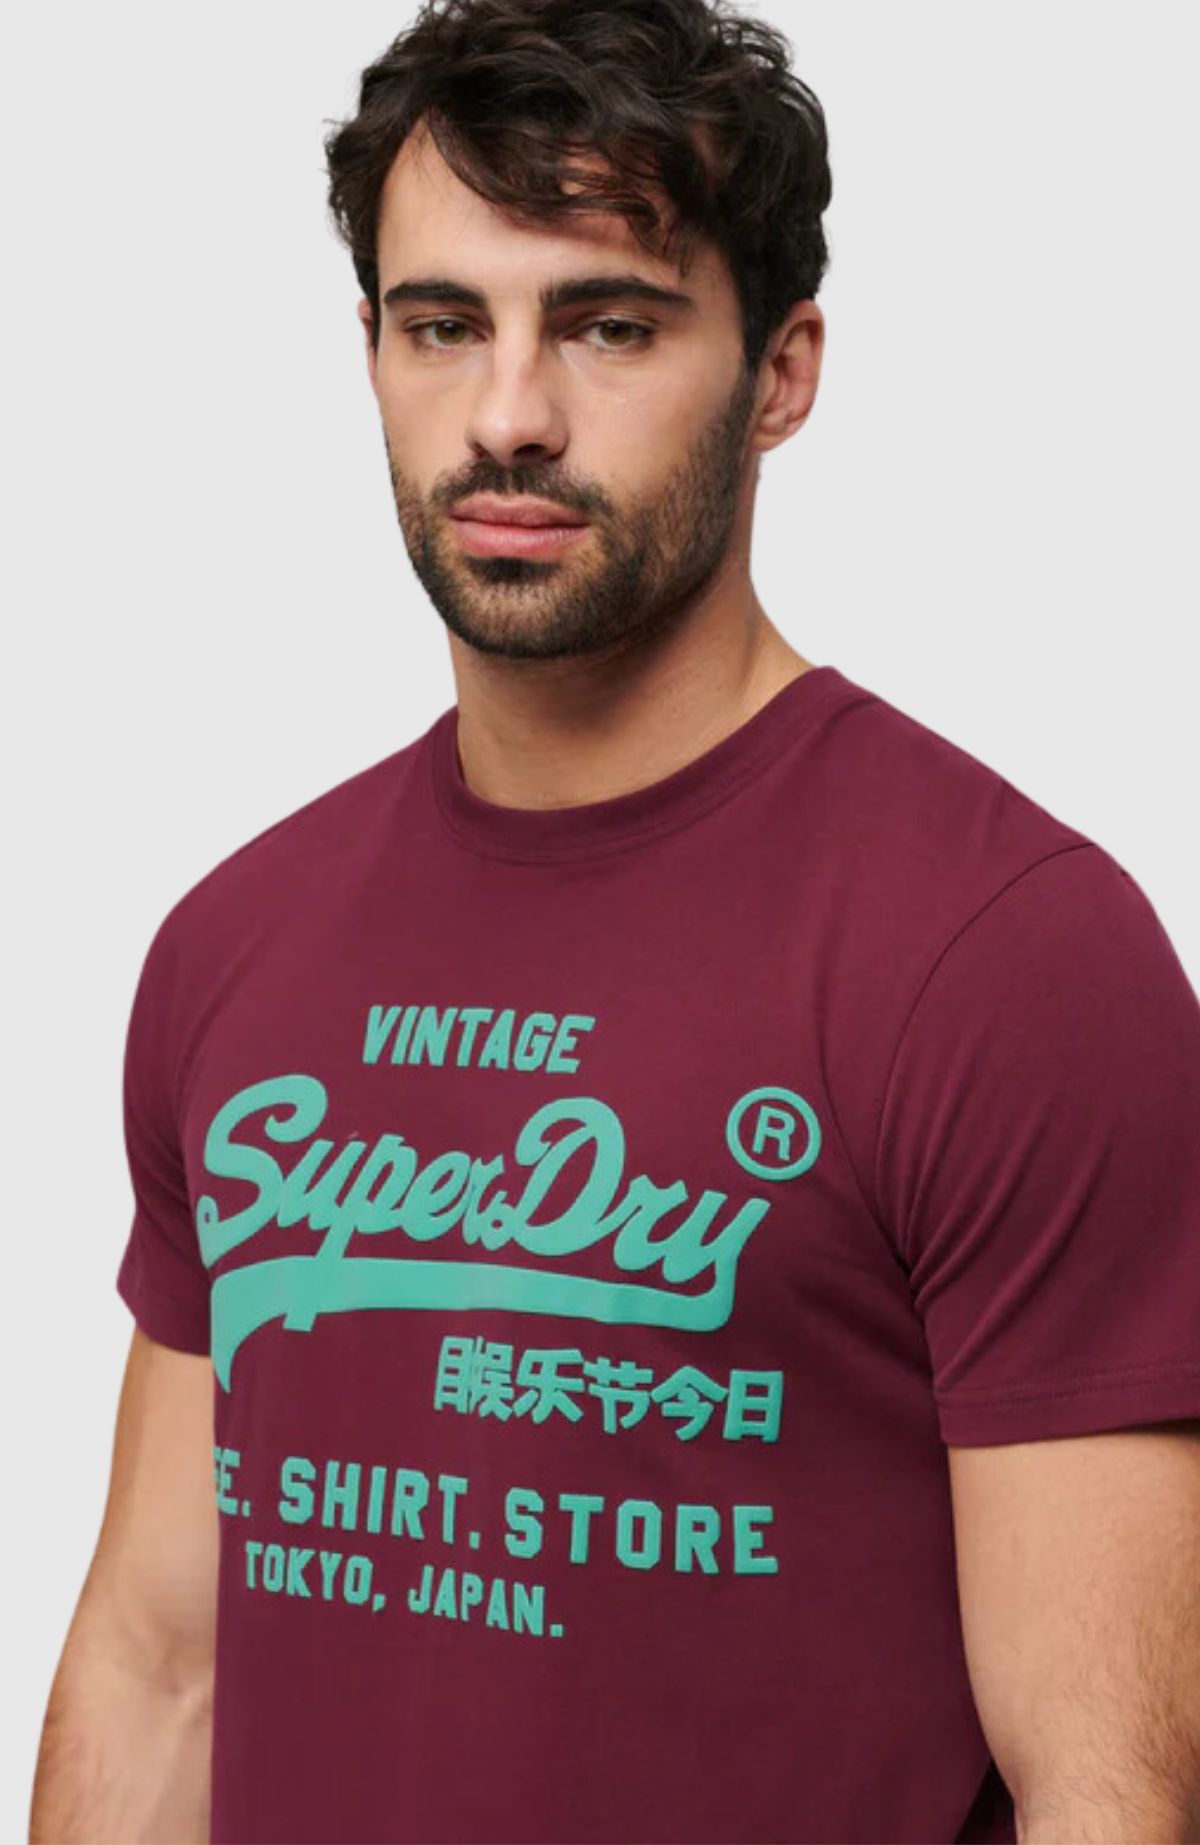 Neon Vl T Shirt